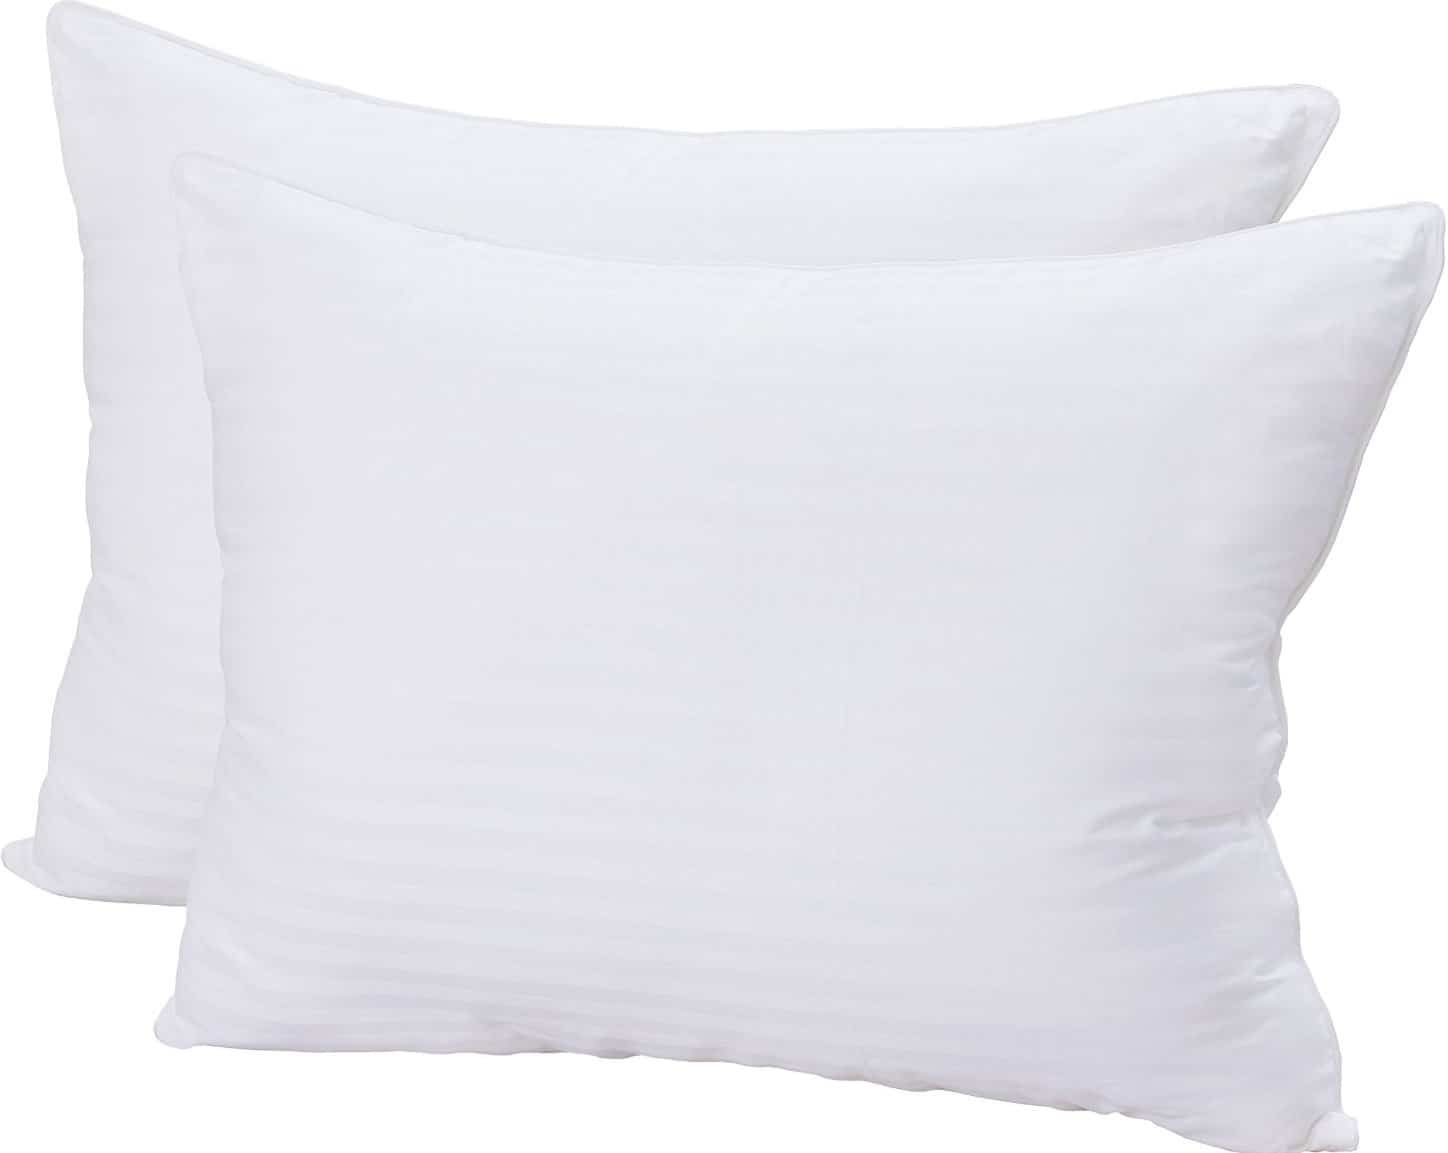 Utopia Bedding Super Plush Fiber Filled Pillows